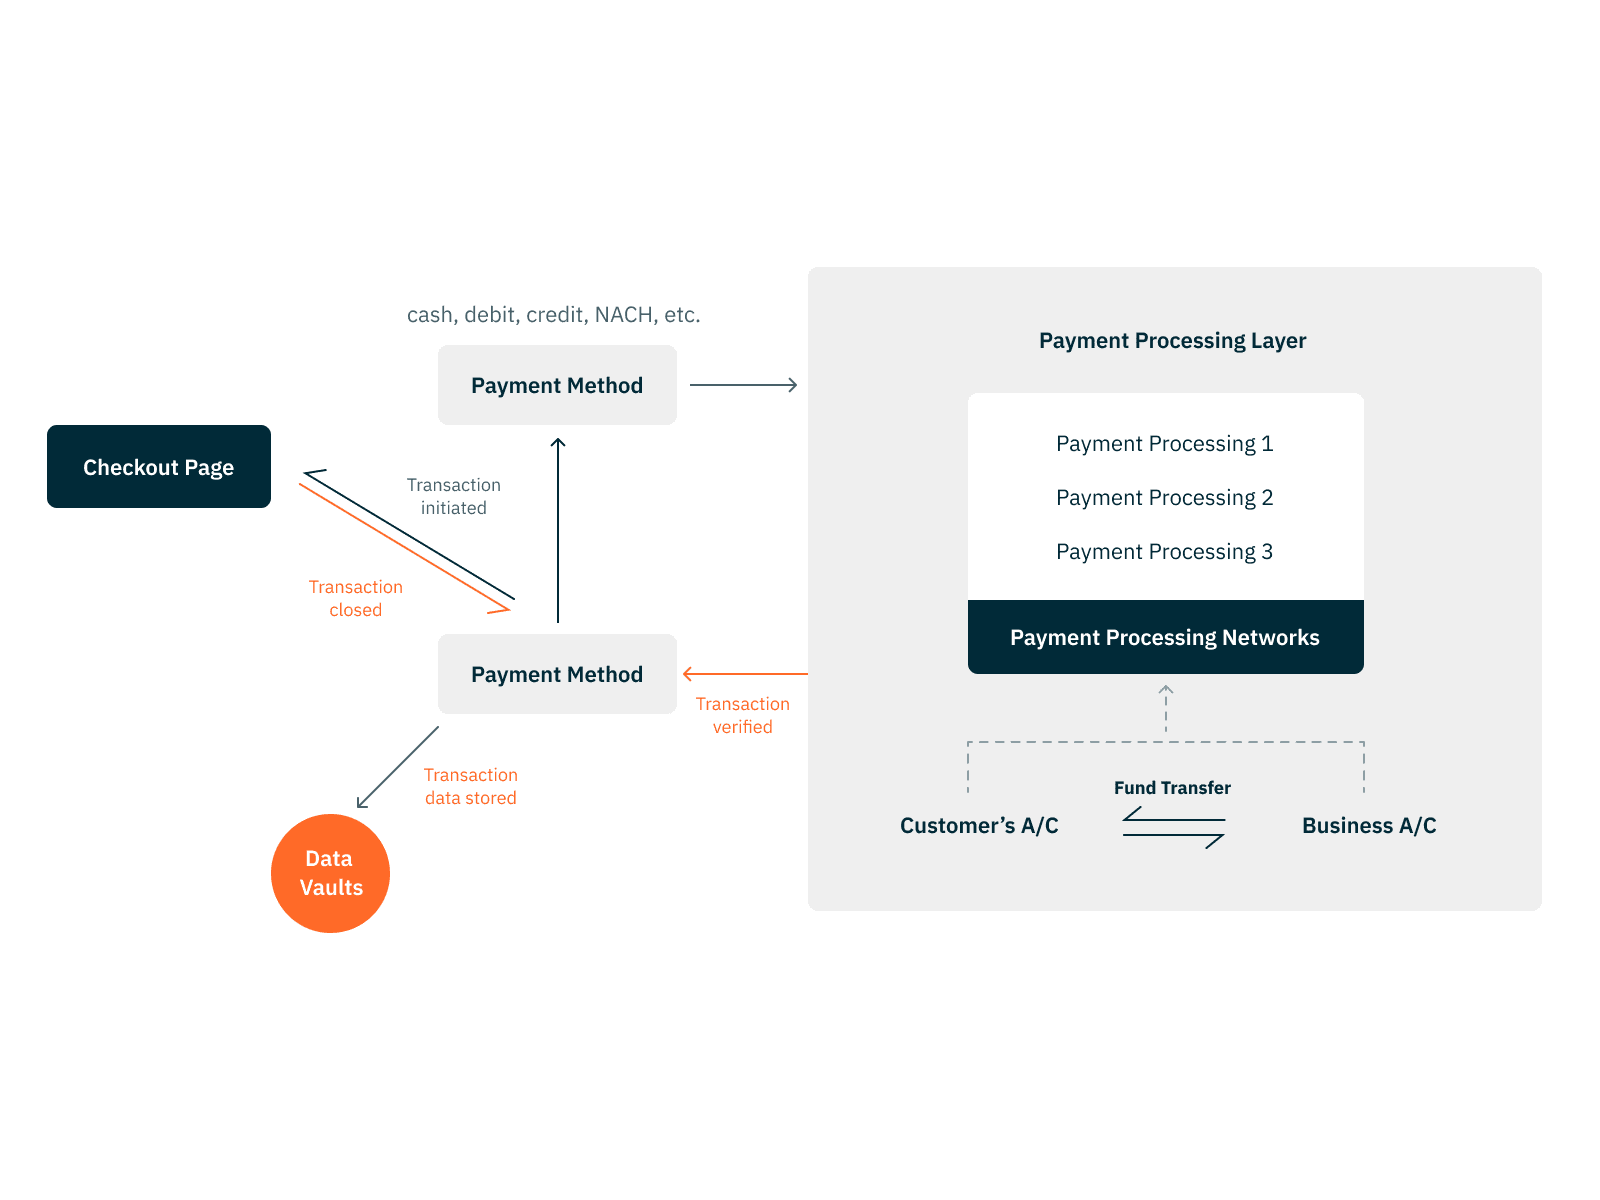 A transaction model centered around payment gateways